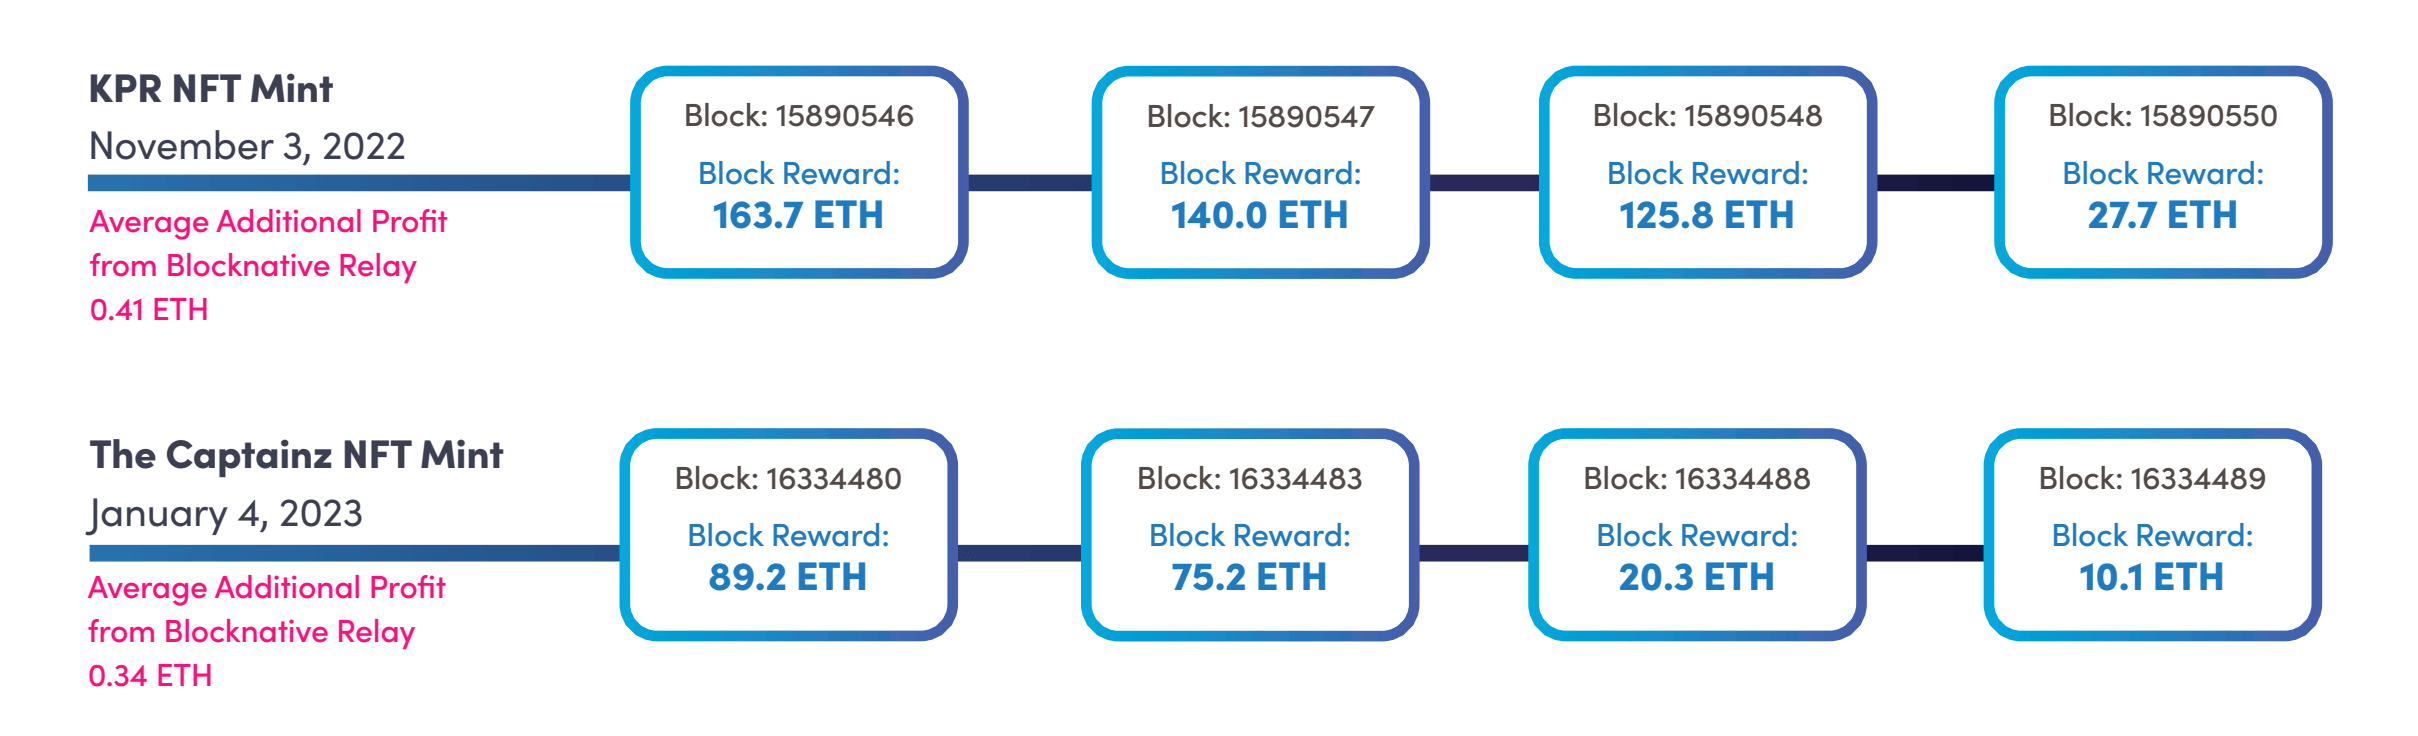 blocknative block reward performance